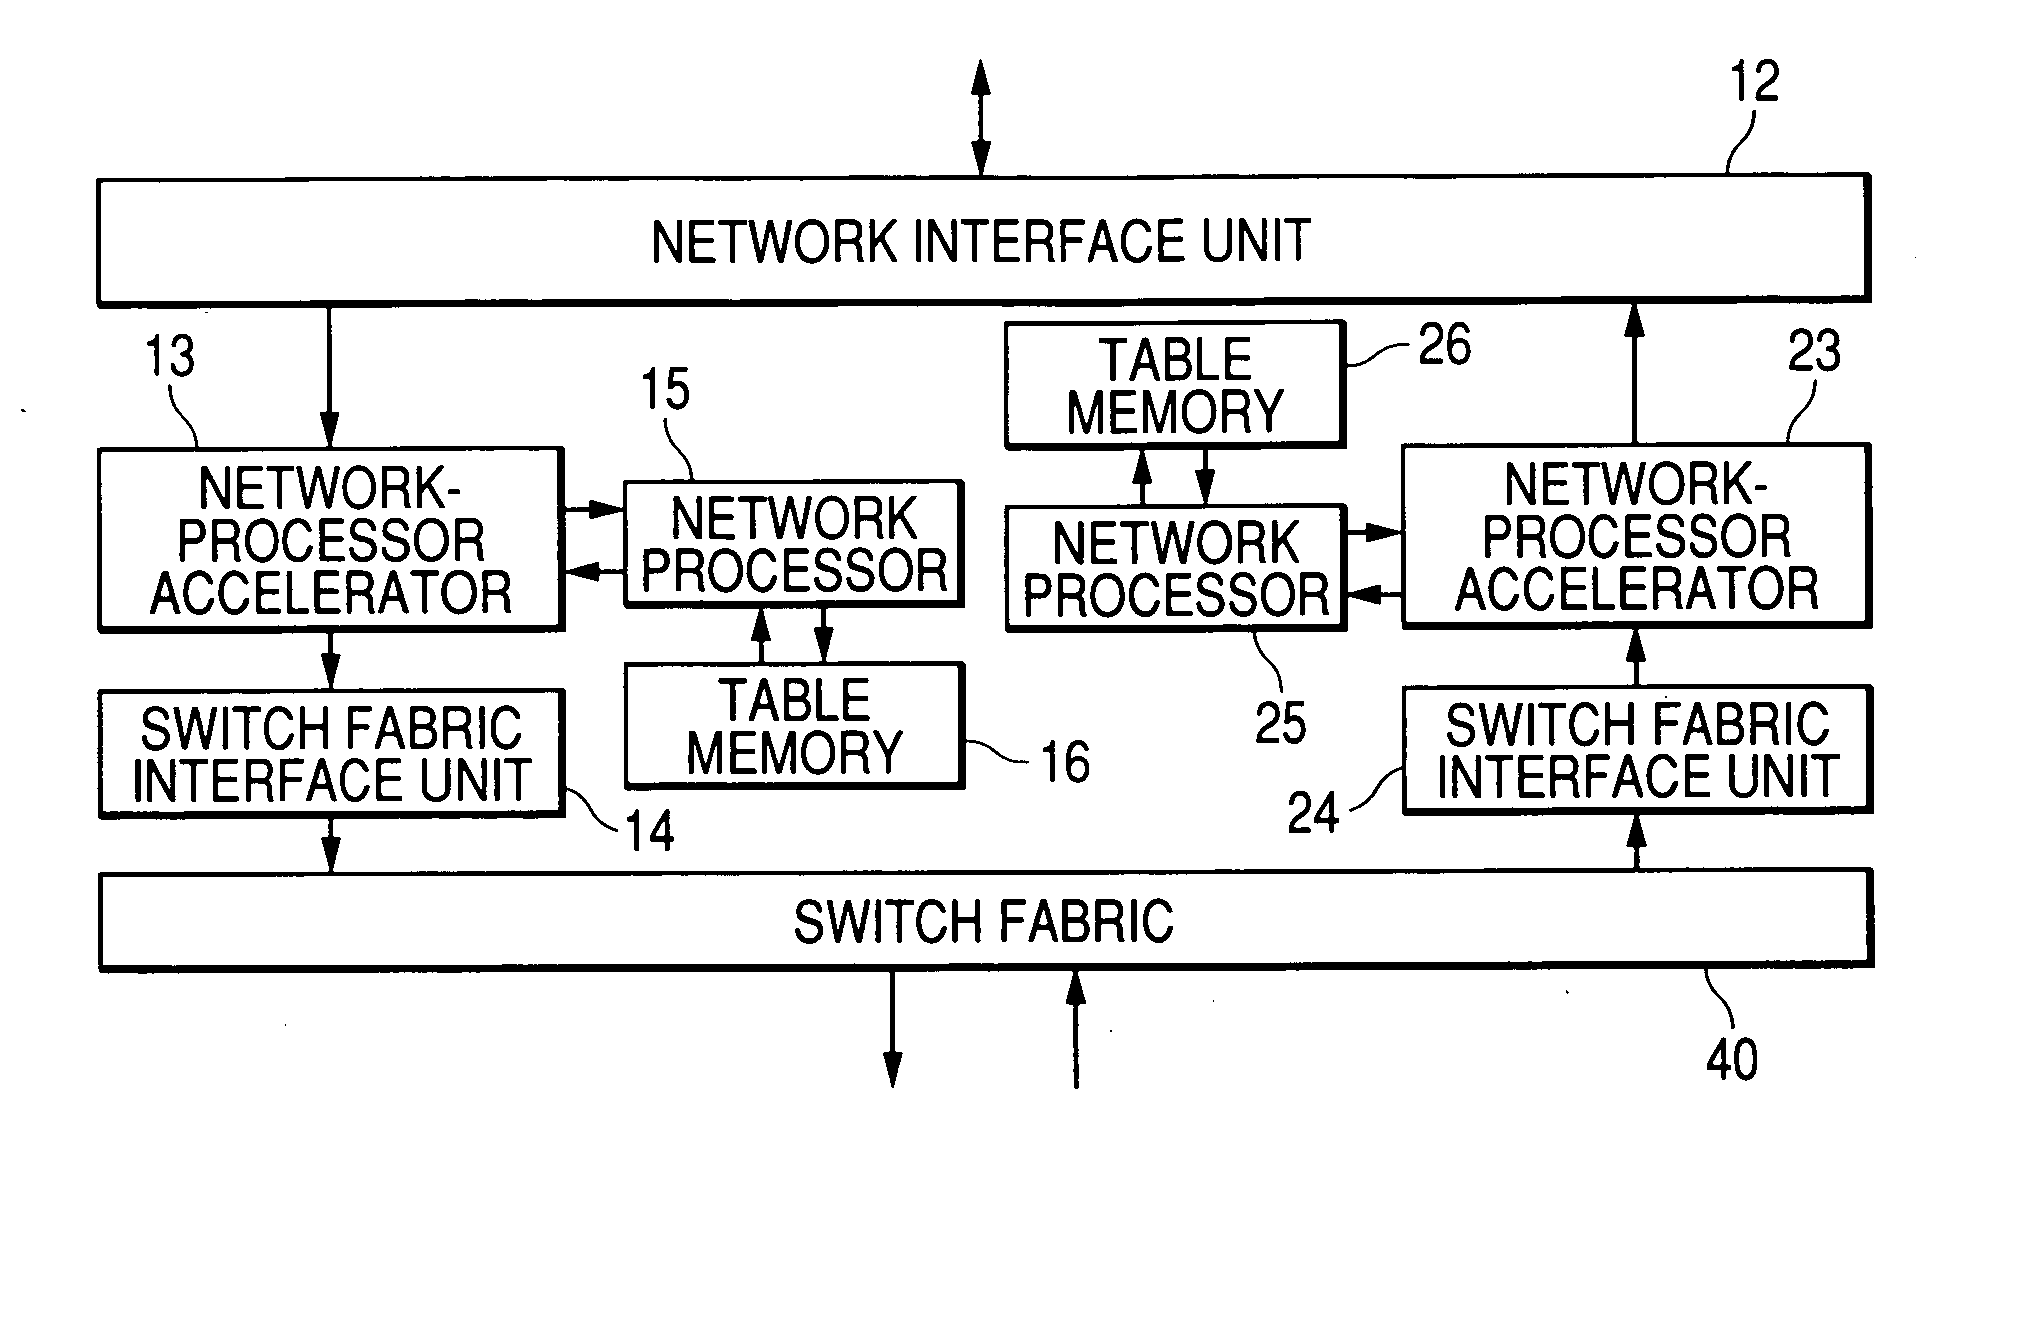 Network-processor accelerator